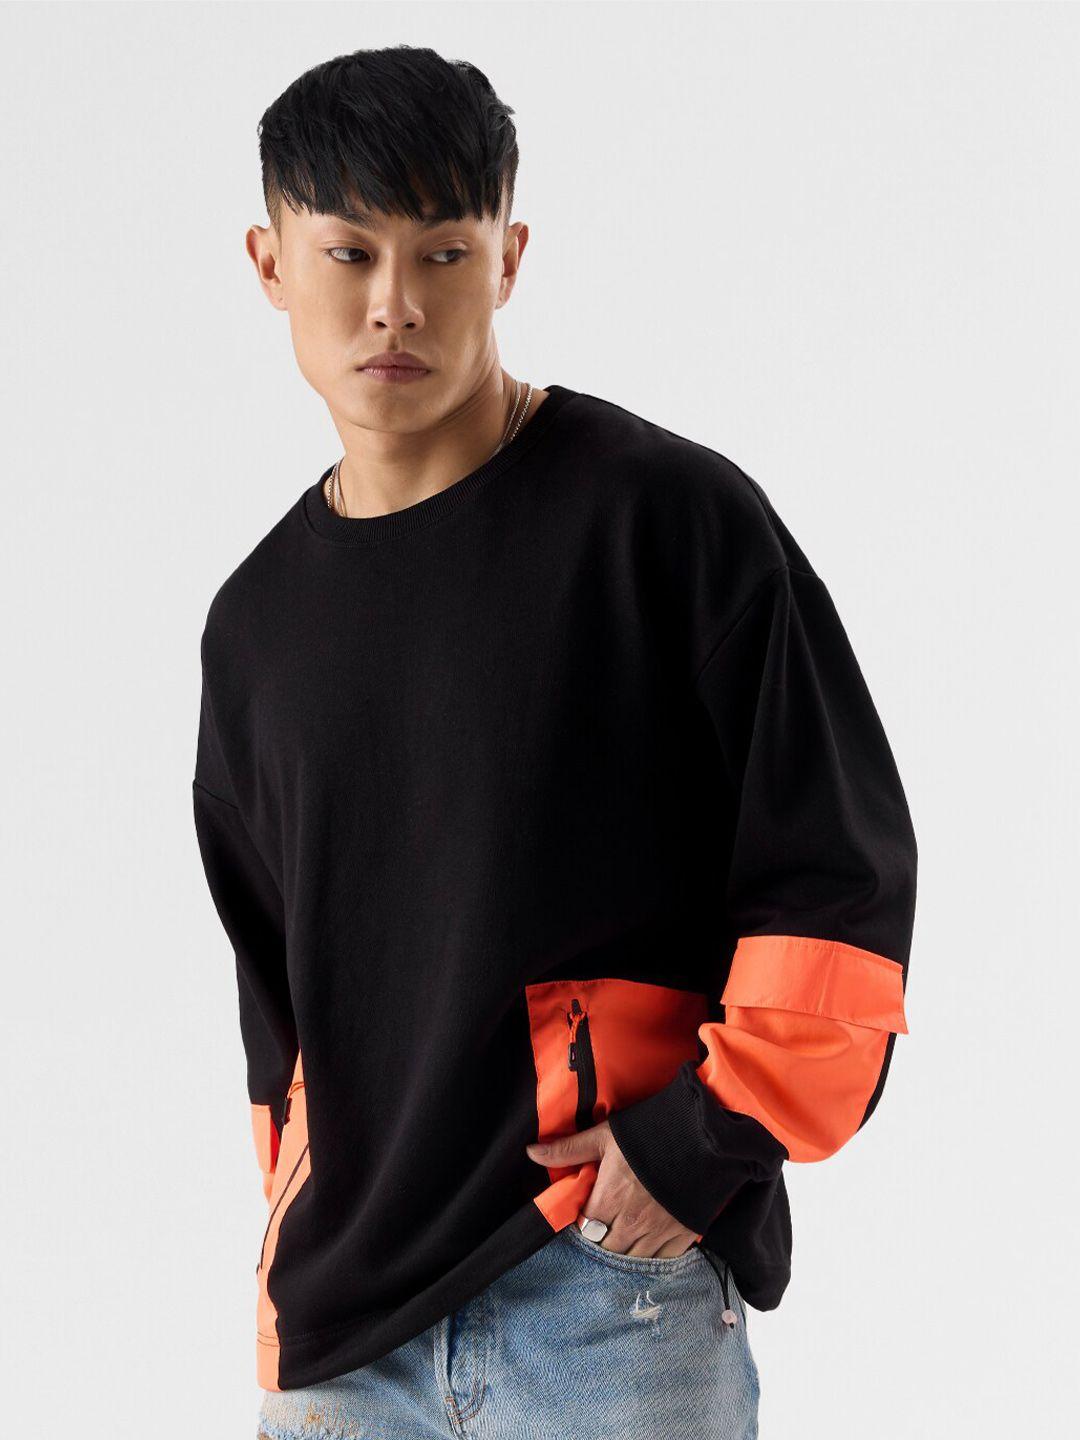 The Souled Store Black & Orange Colourblocked Pullover Sweatshirt